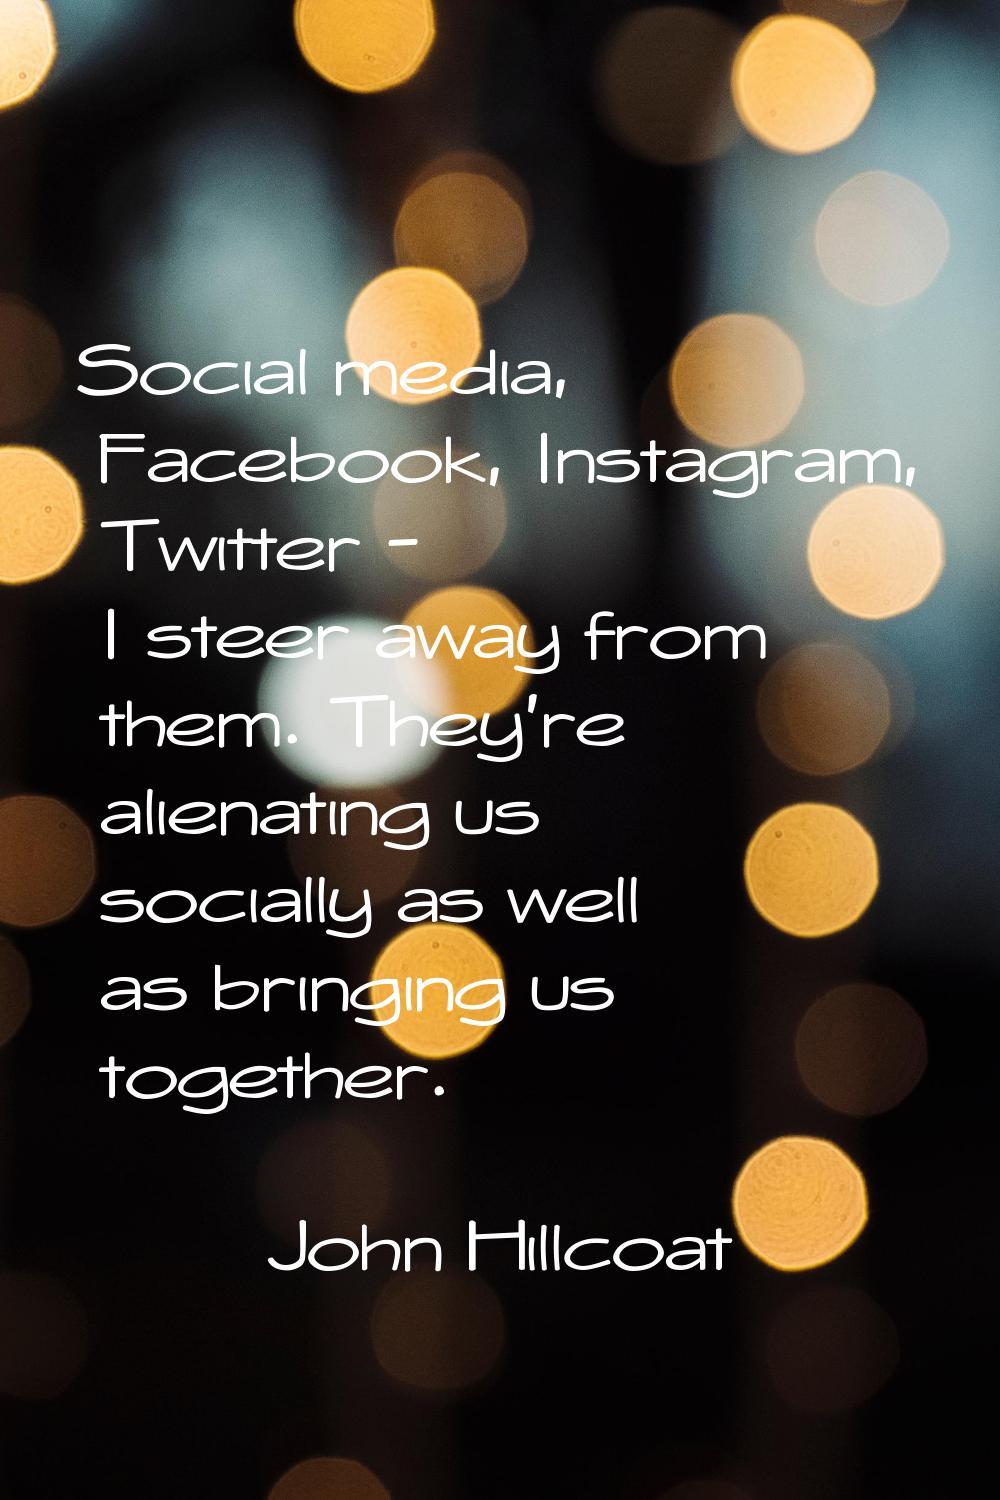 Social media, Facebook, Instagram, Twitter - I steer away from them. They're alienating us socially